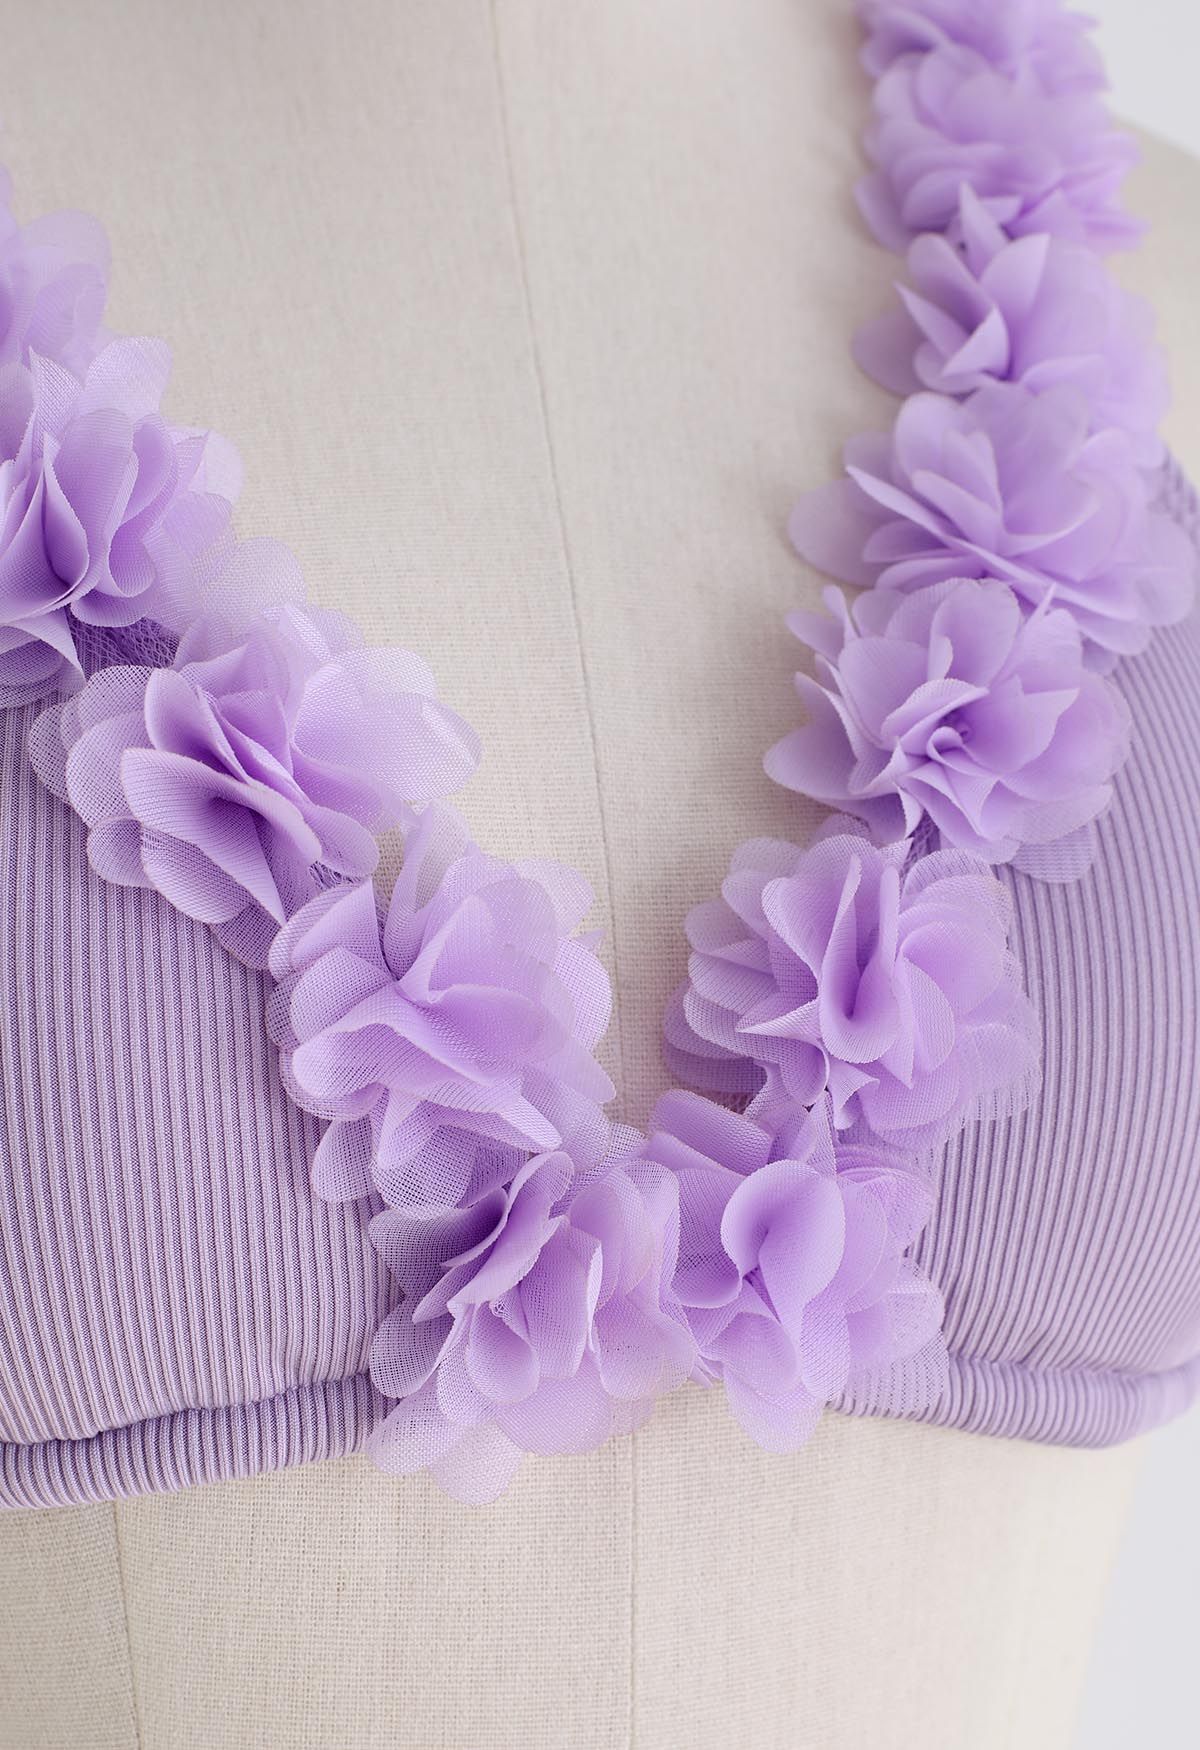 3D Mesh Floral Deep-V Bikini Set in Lilac